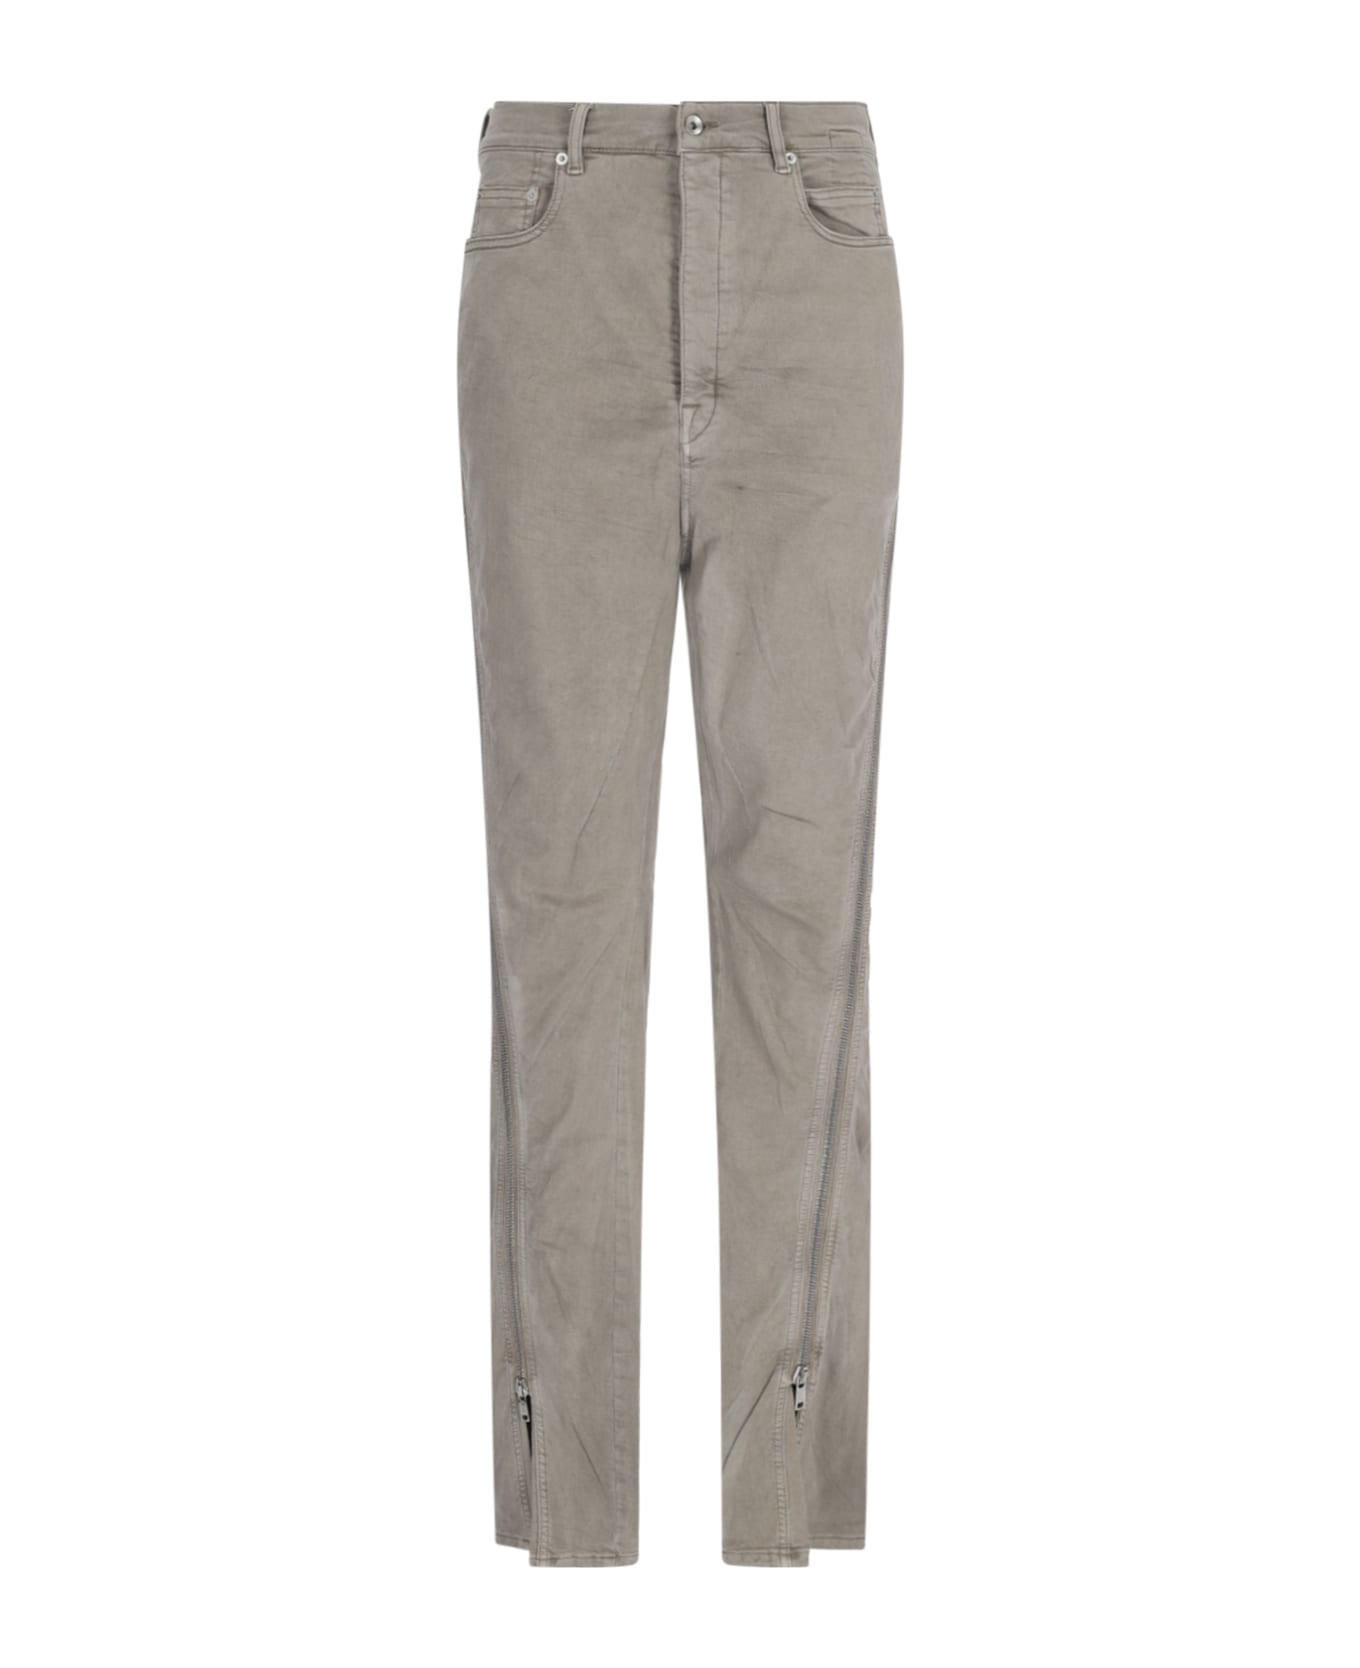 DRKSHDW Zip Detail Jeans - Beige